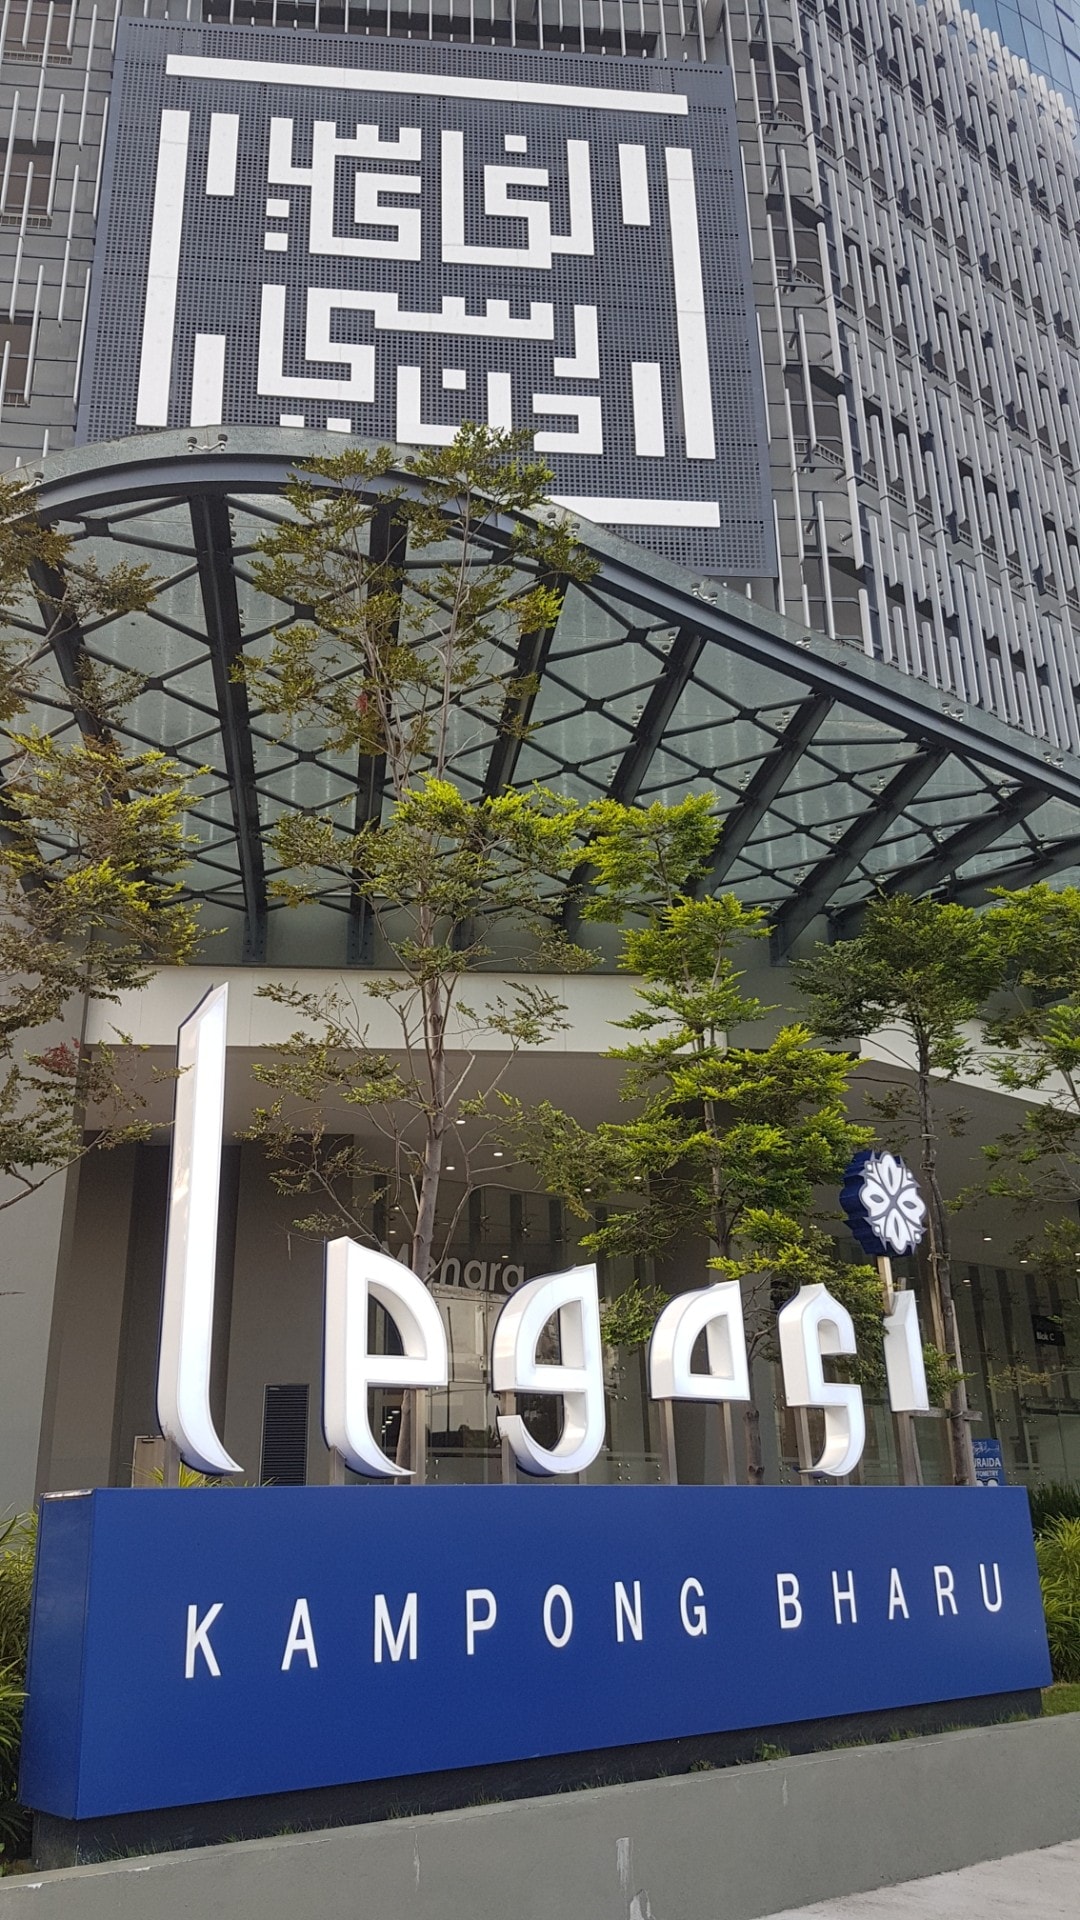 Chombi Legasi客房，
步行10分钟即可抵达吉隆坡城中城